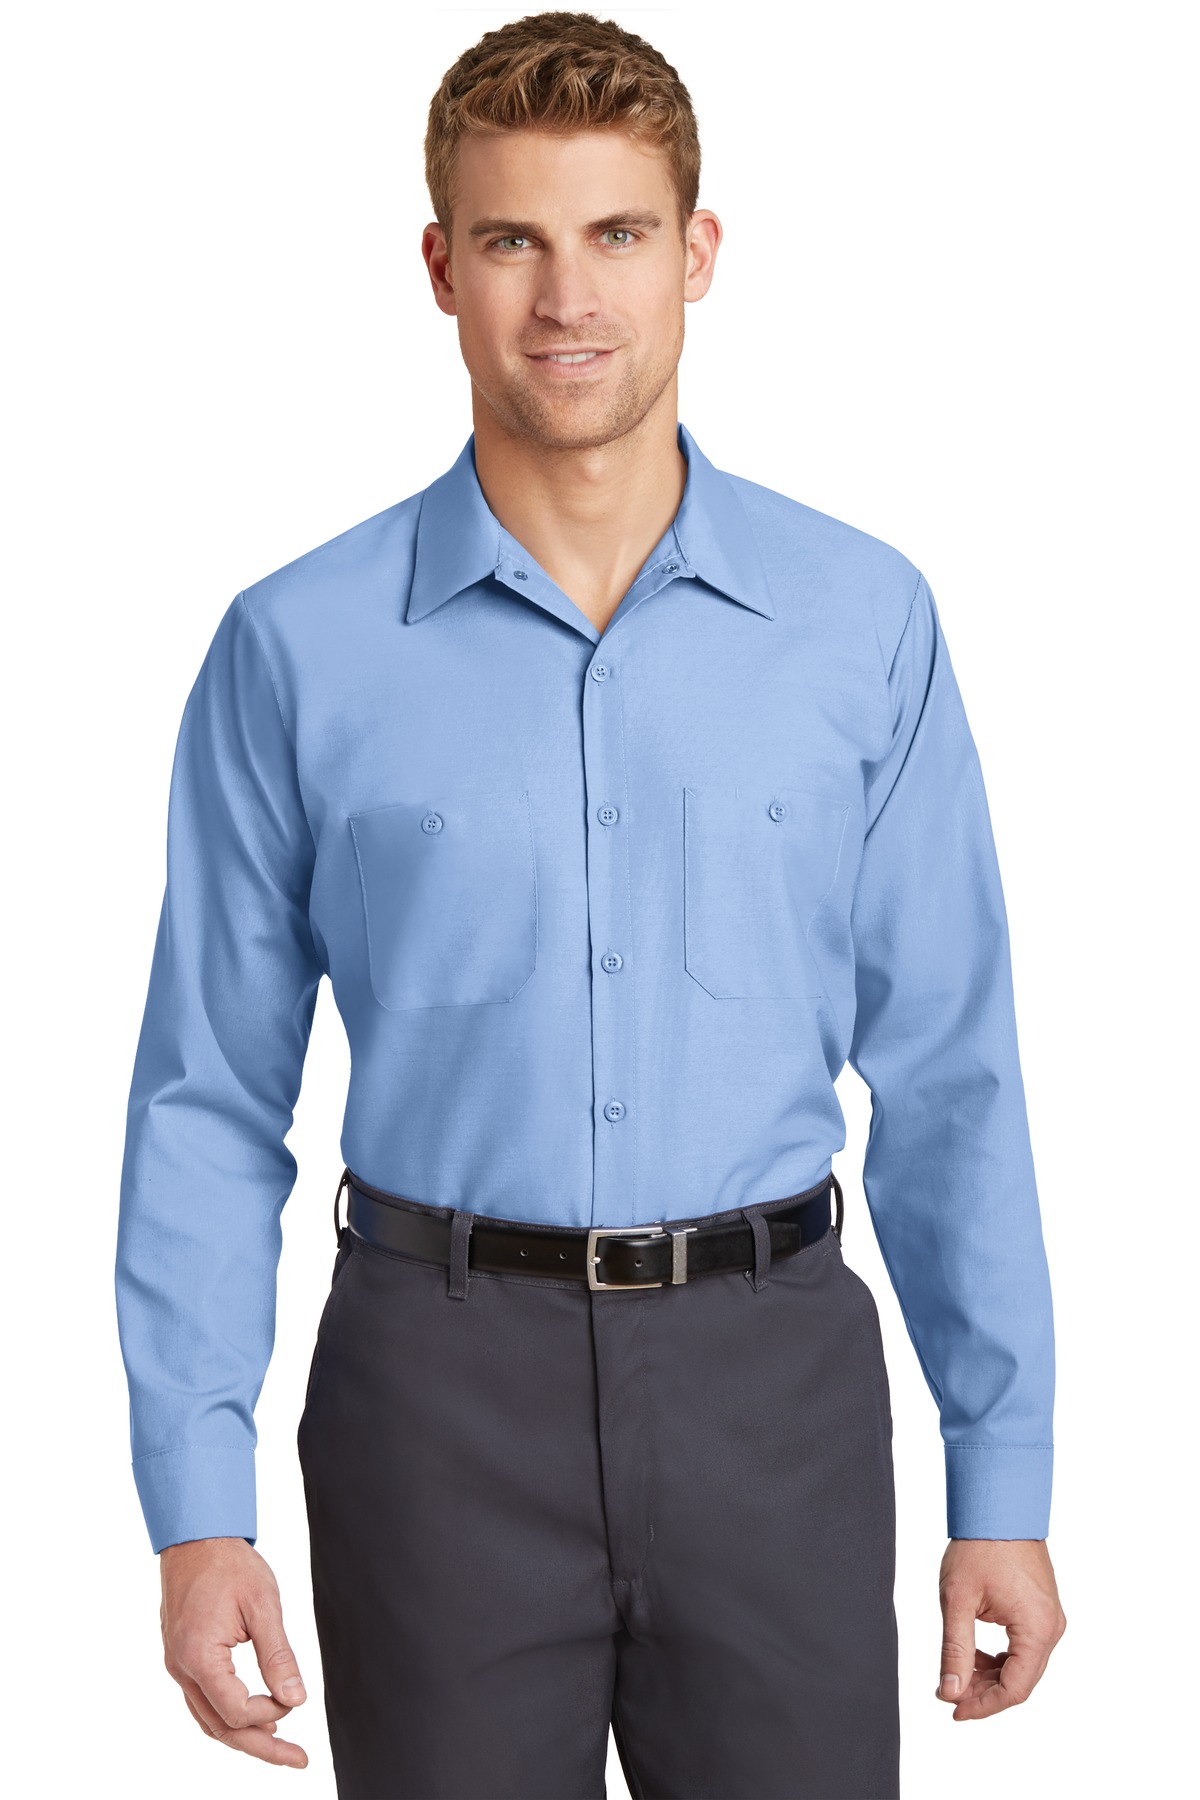 Red Kap Hospitality Workwear & Woven Shirts ® Long Sleeve Industrial Work Shirt.-Red Kap